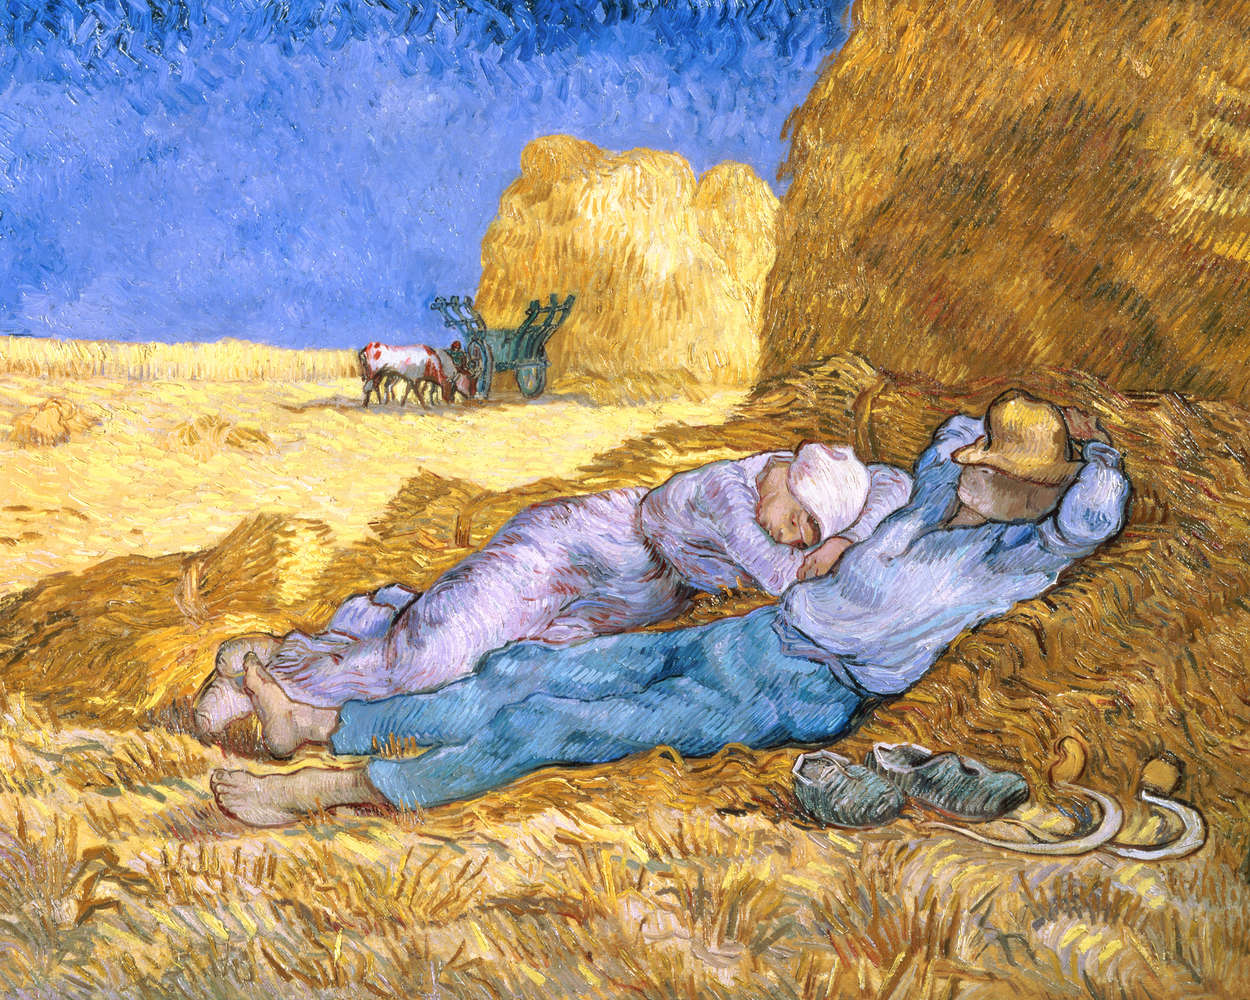             Mural "La siesta después de Millet" de Vincent van Gogh
        